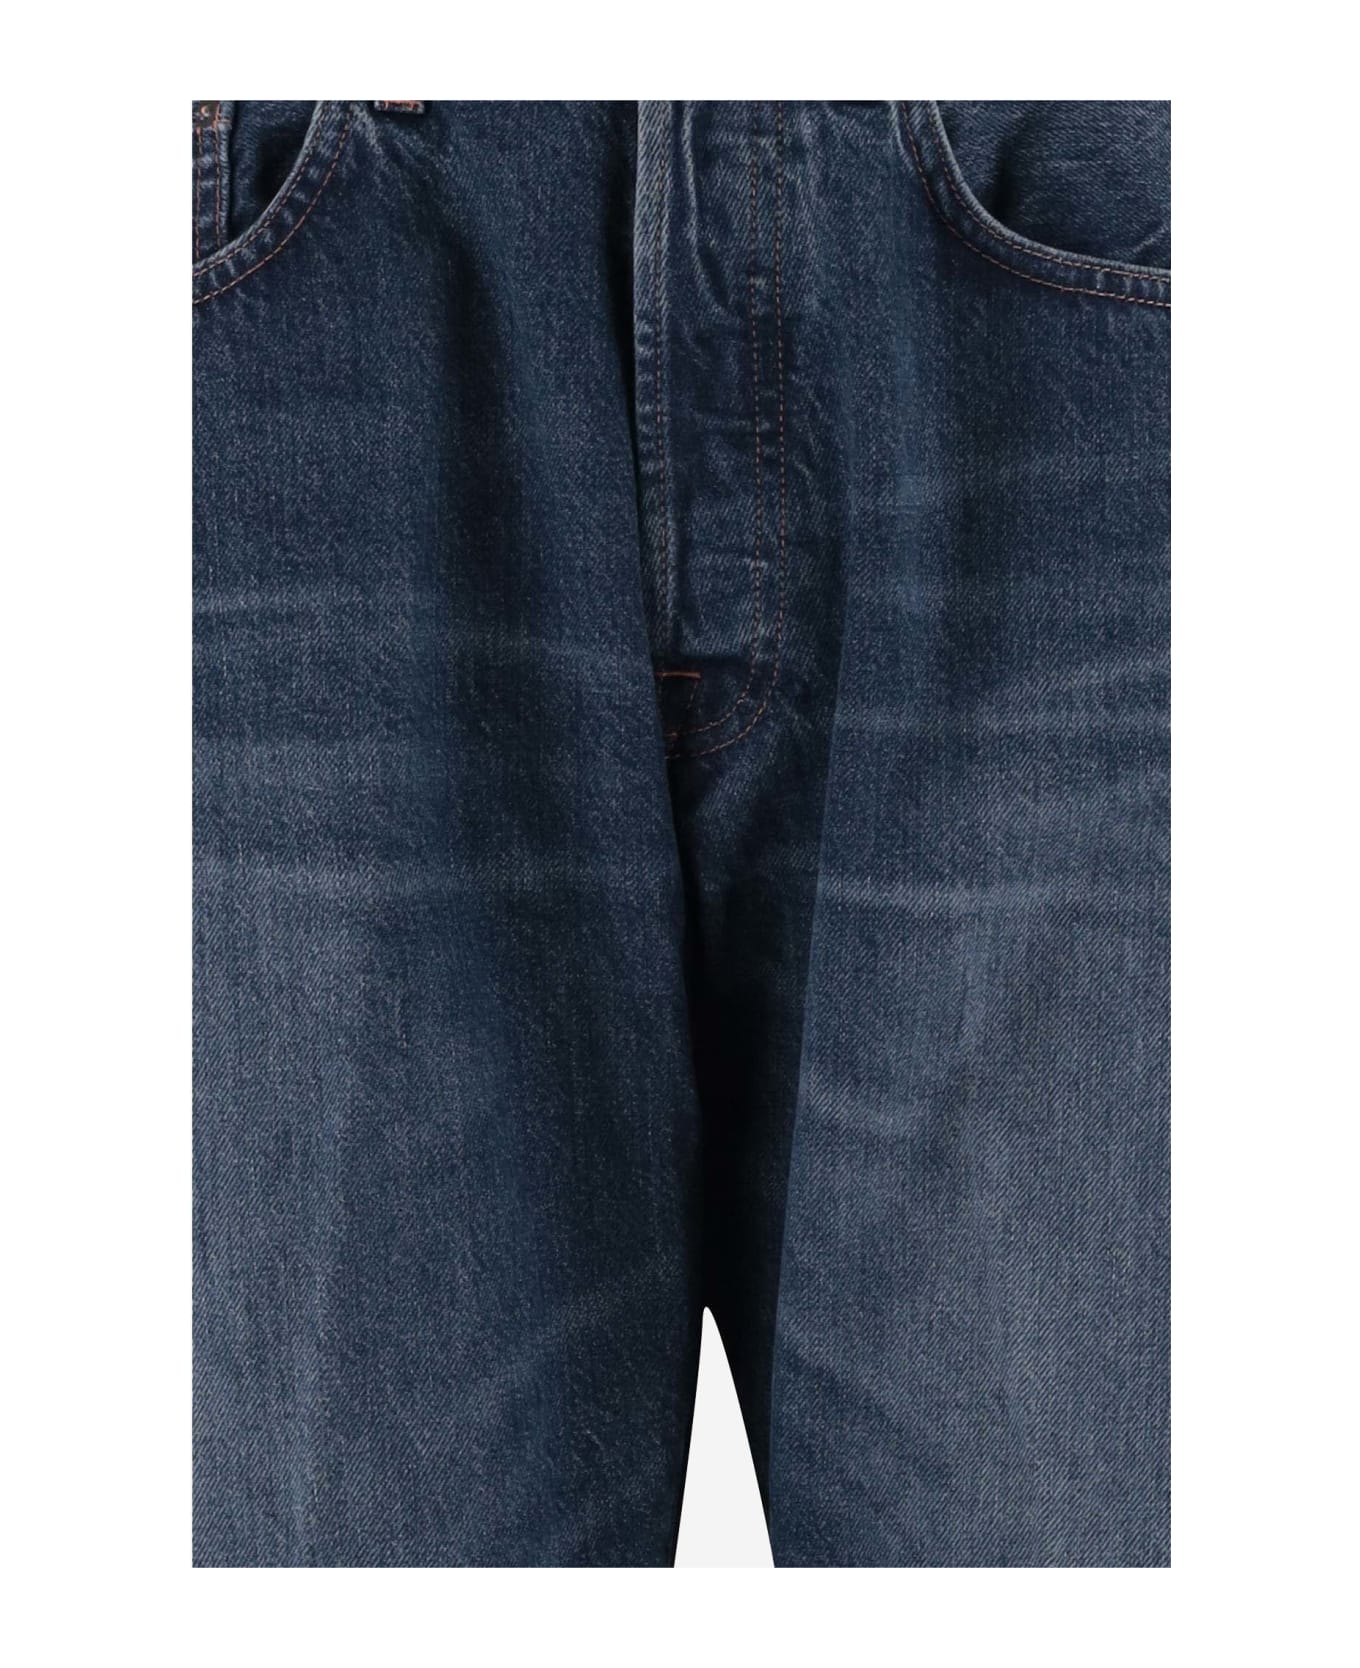 Made in Tomboy Cotton Denim Jeans - Blue デニム